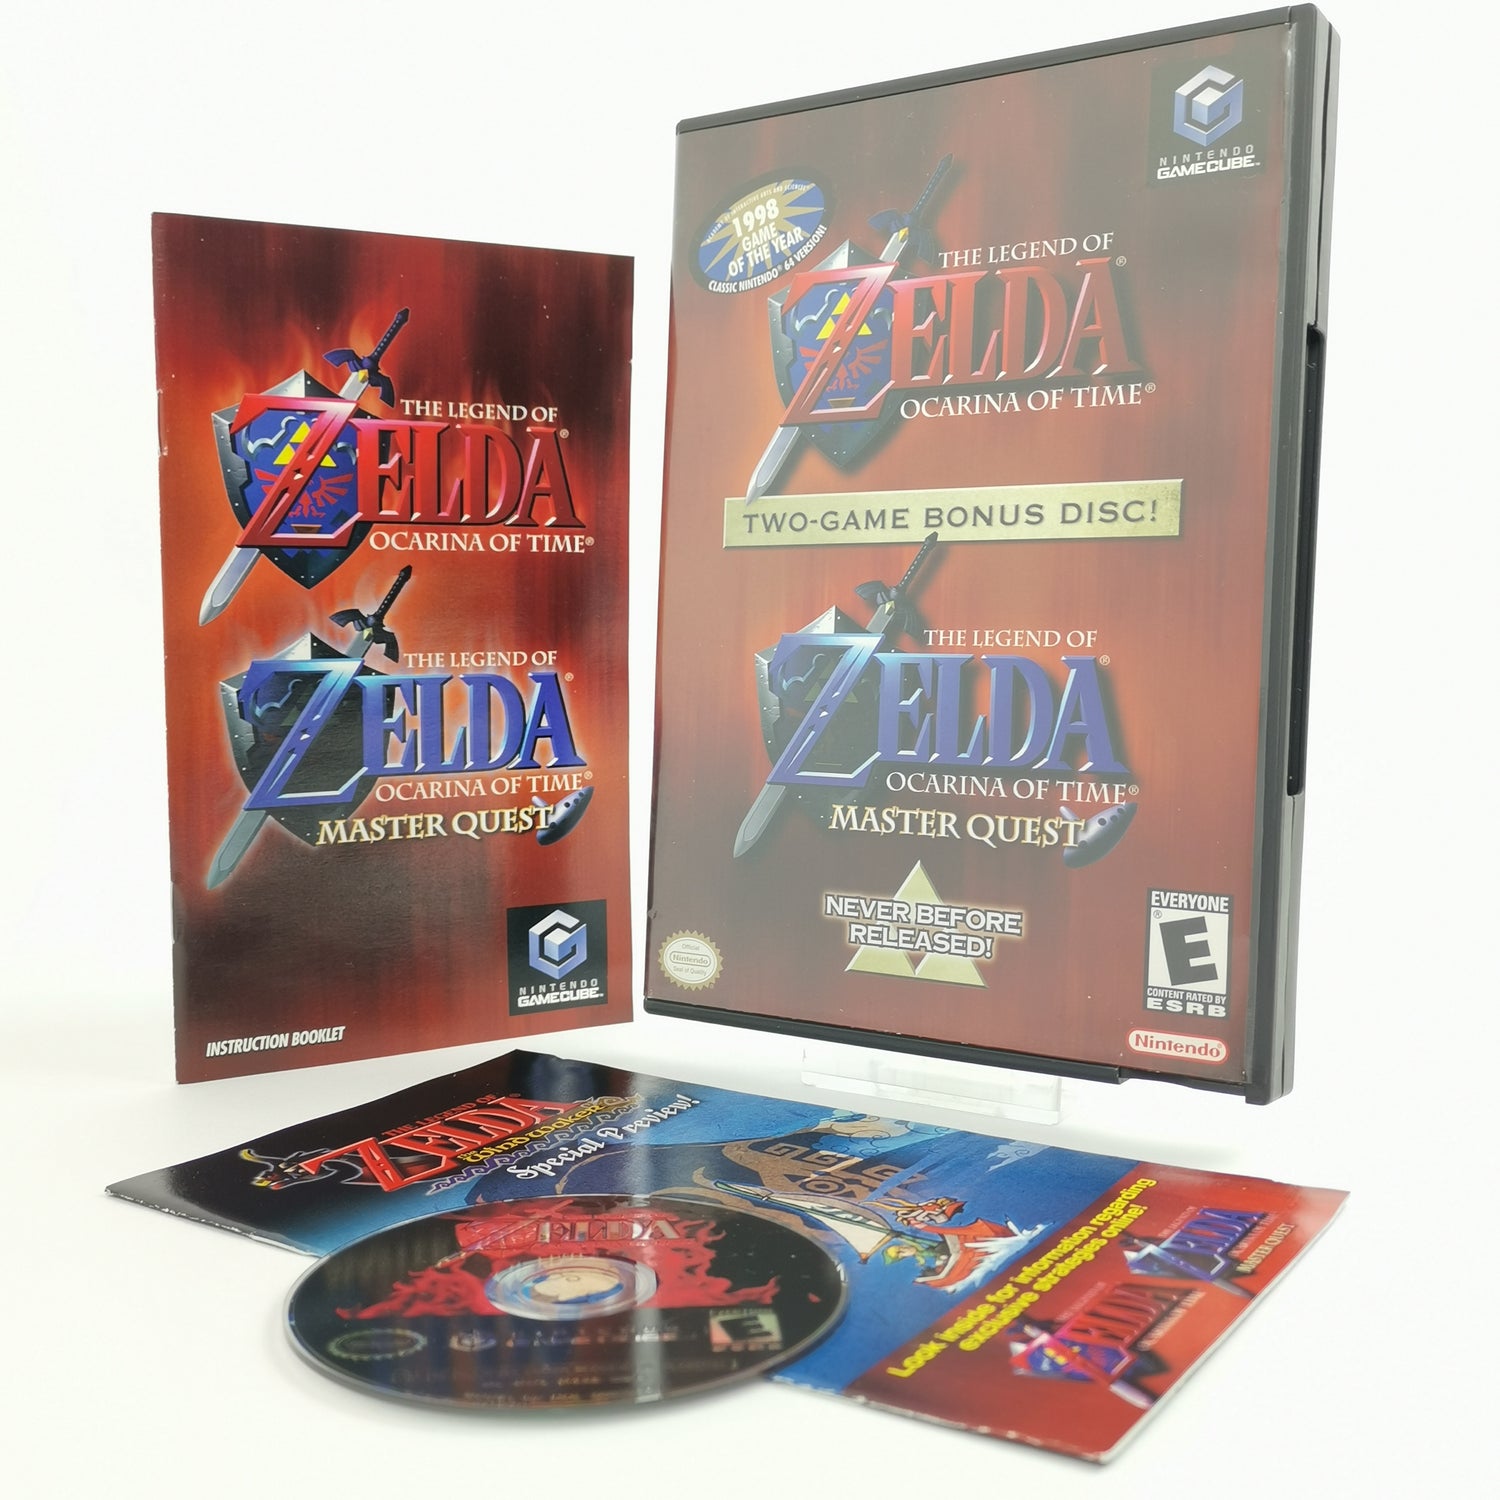 Nintendo Gamecube Game: The Legend of Zelda Ocarina of Time & Master Quest USA